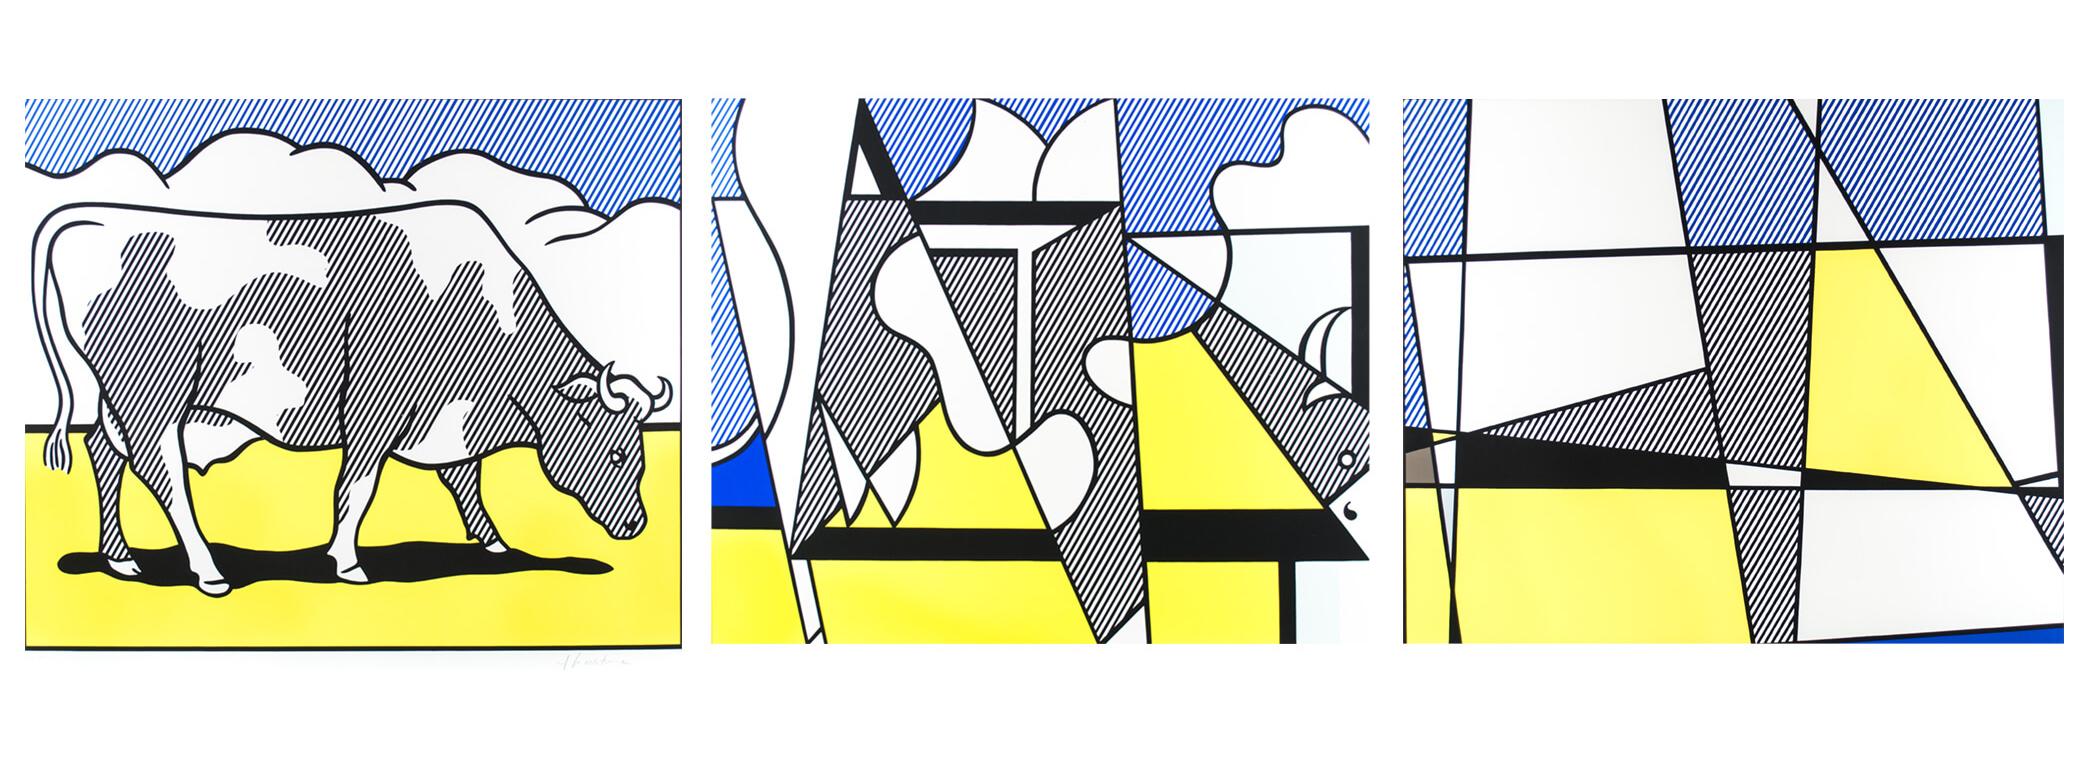 Kuh geht abstrakt (Triptychon)